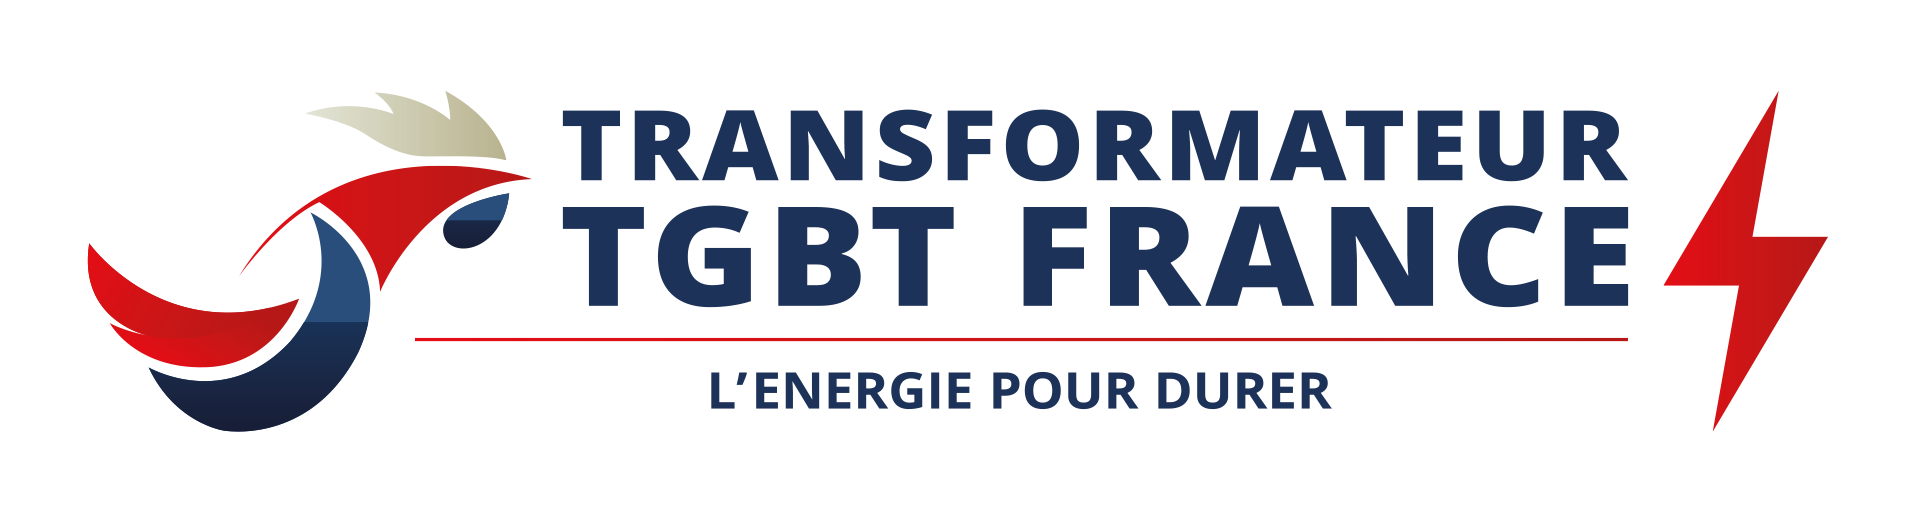 Transformateur TGBT France